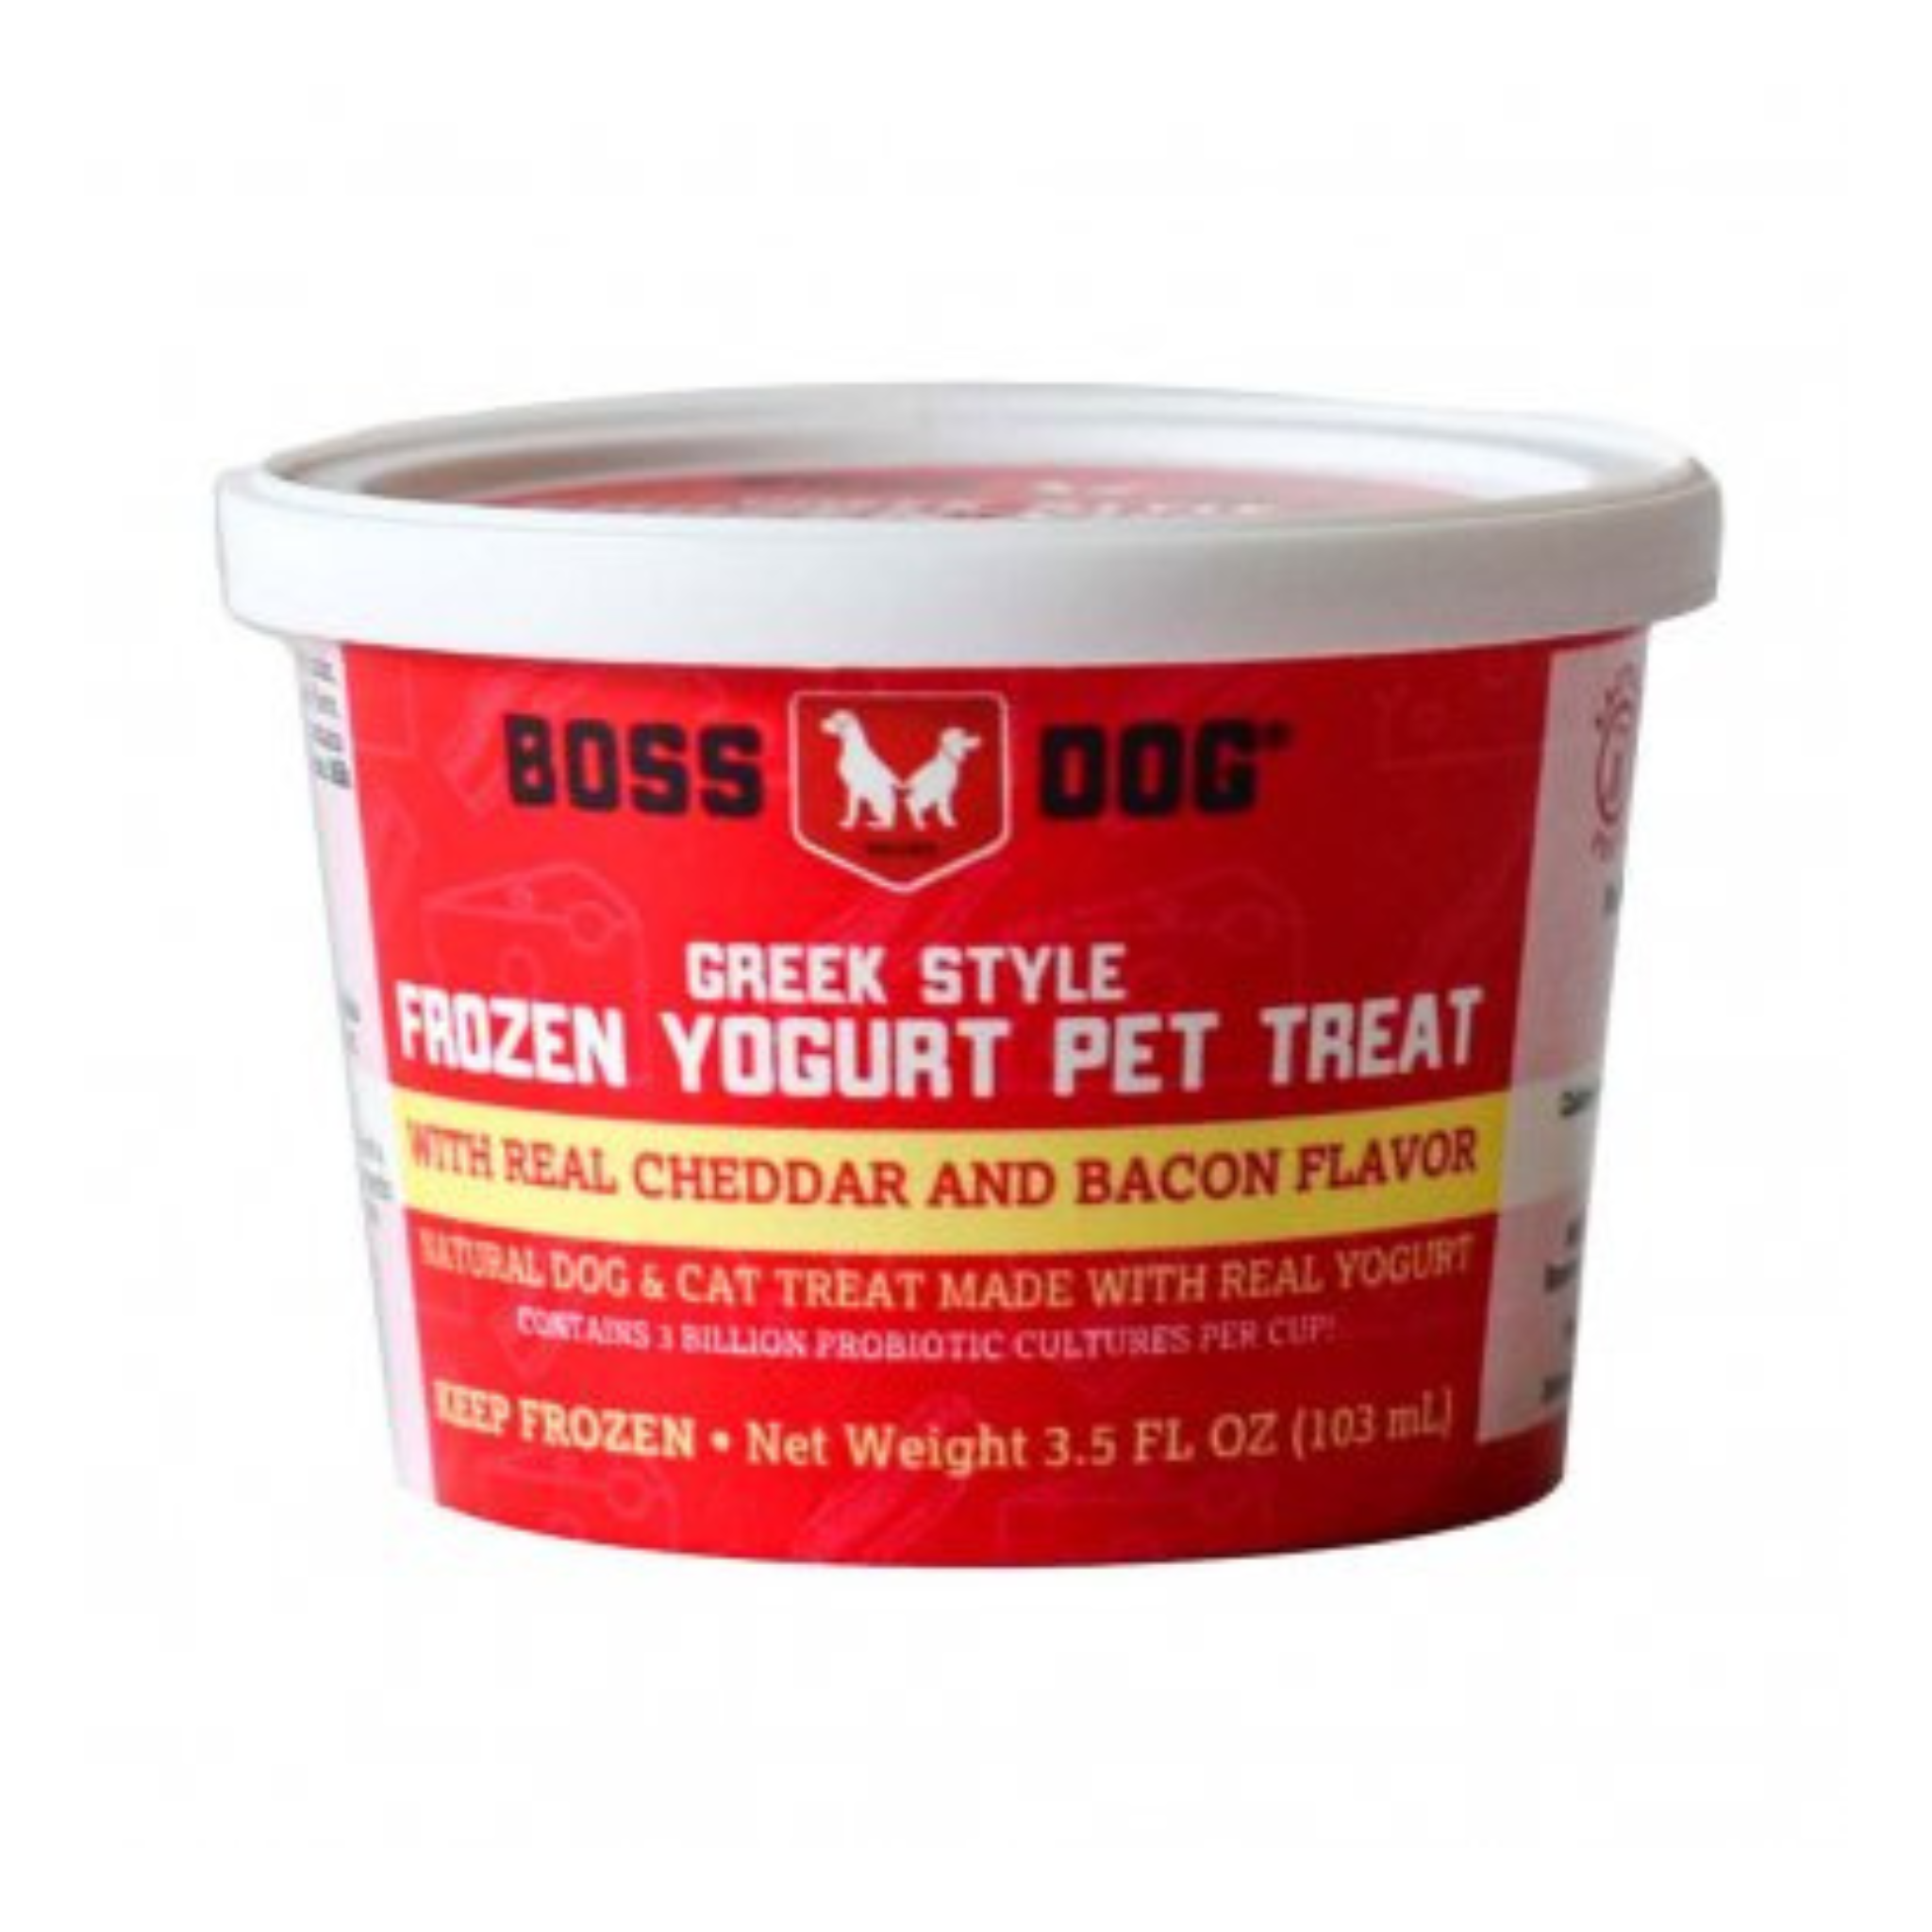 Boss Dog Frozen Greek Yogurt Bacon & Cheddar